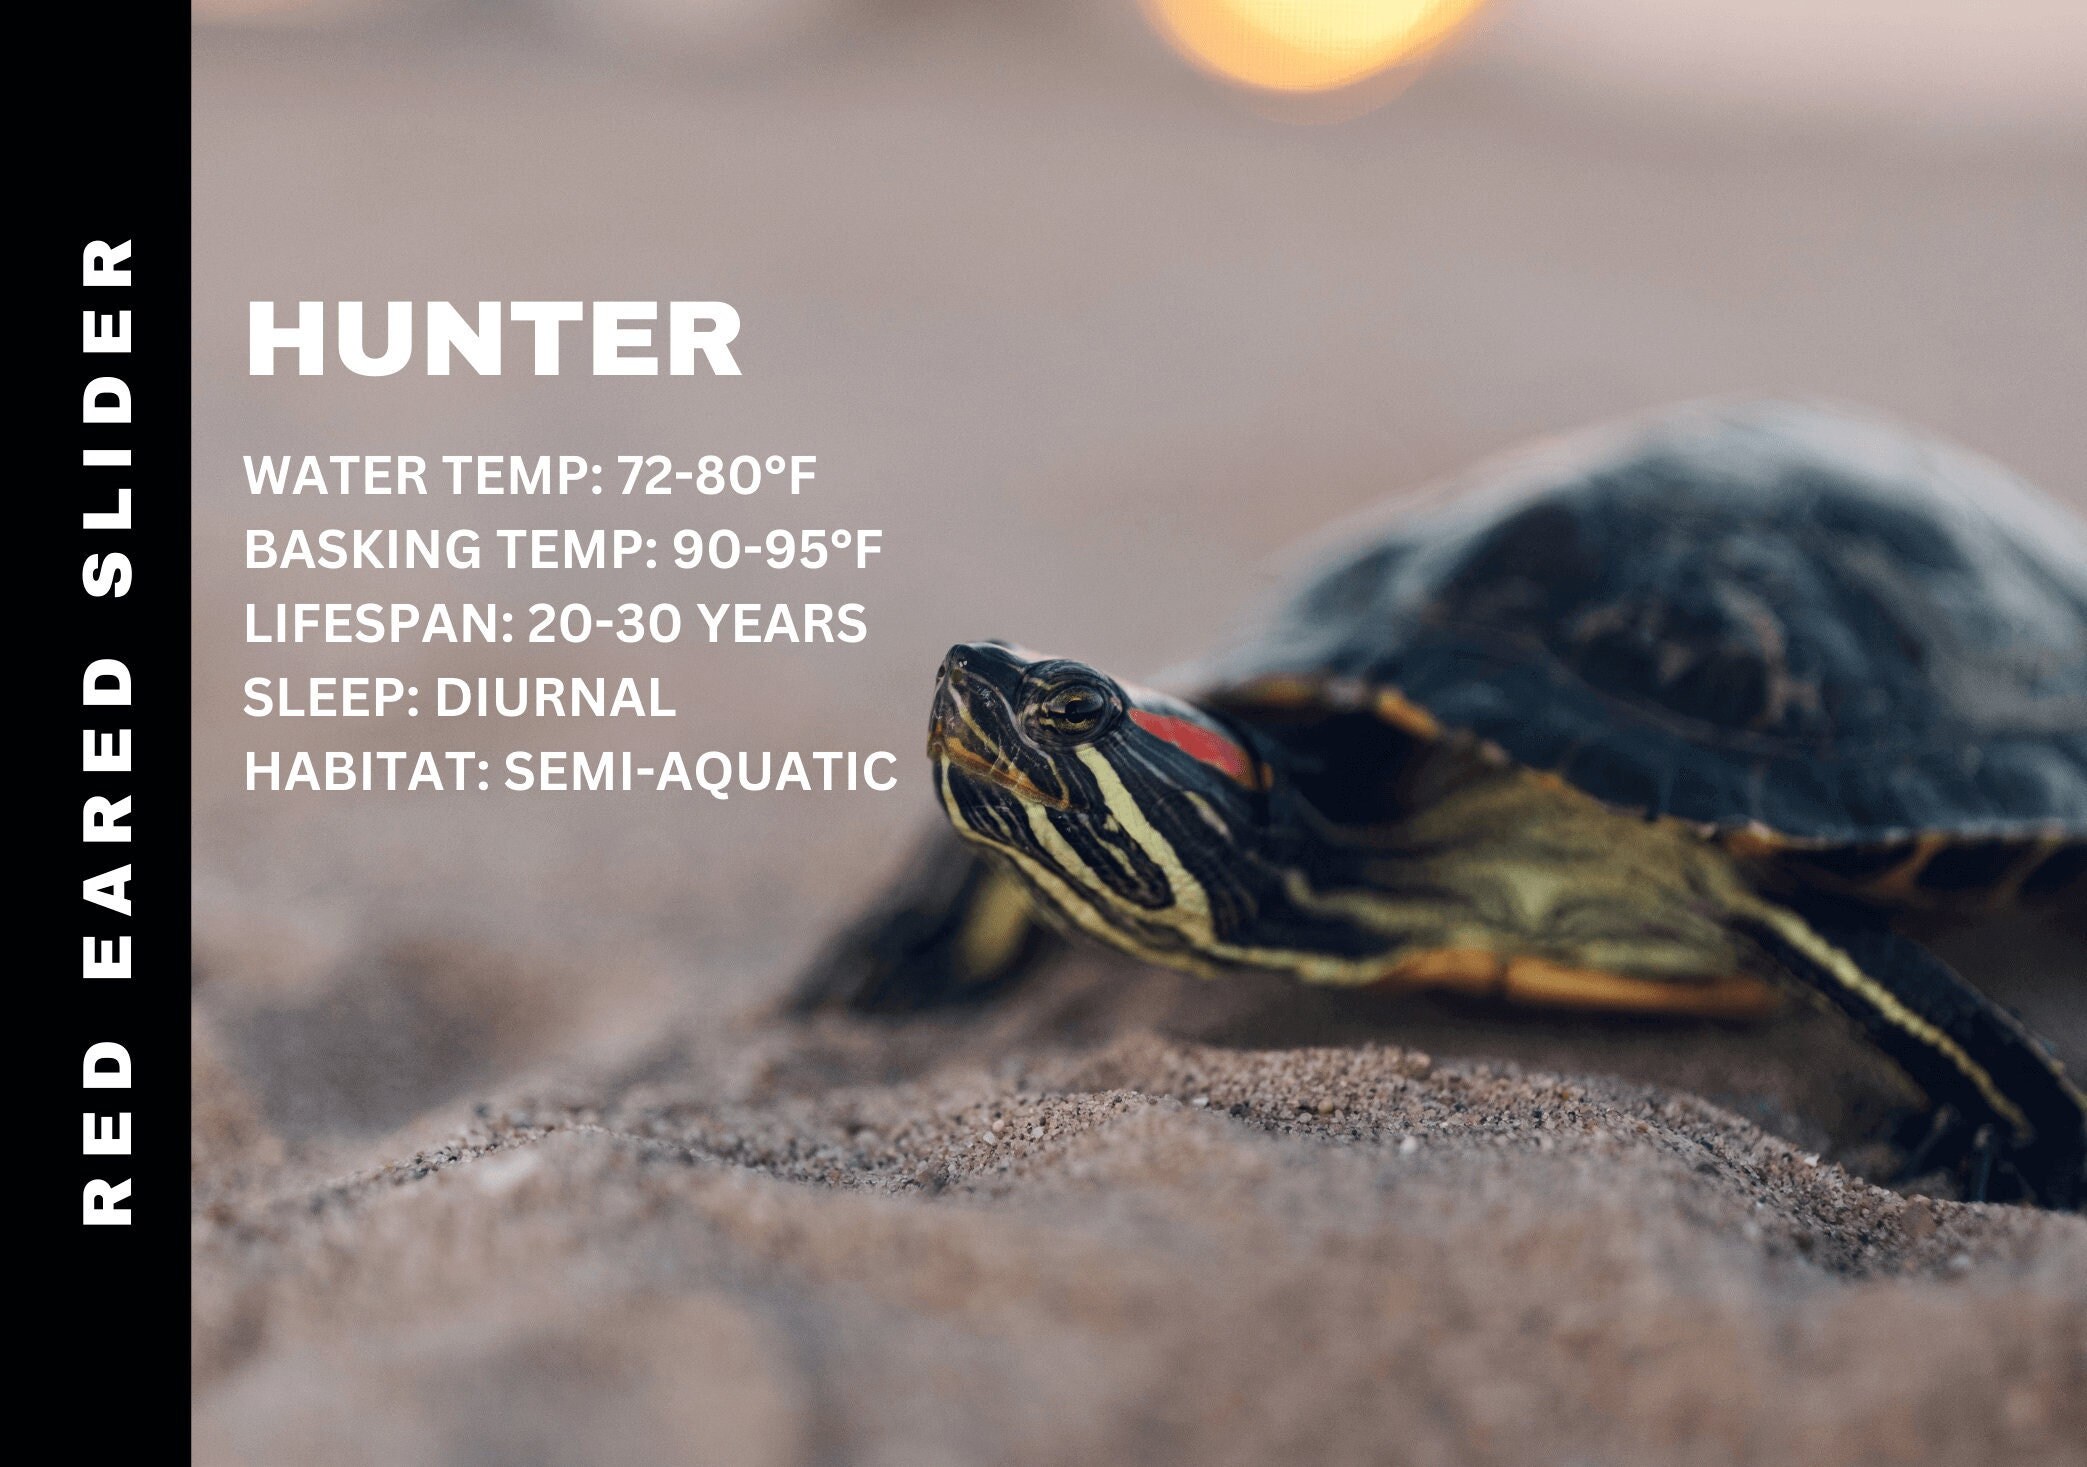 THE BEST KIT EVER - RED EARED SLIDER TURTLE Mini-Verse Resin Kit! The  CUTEST turtle habitat EVER! 